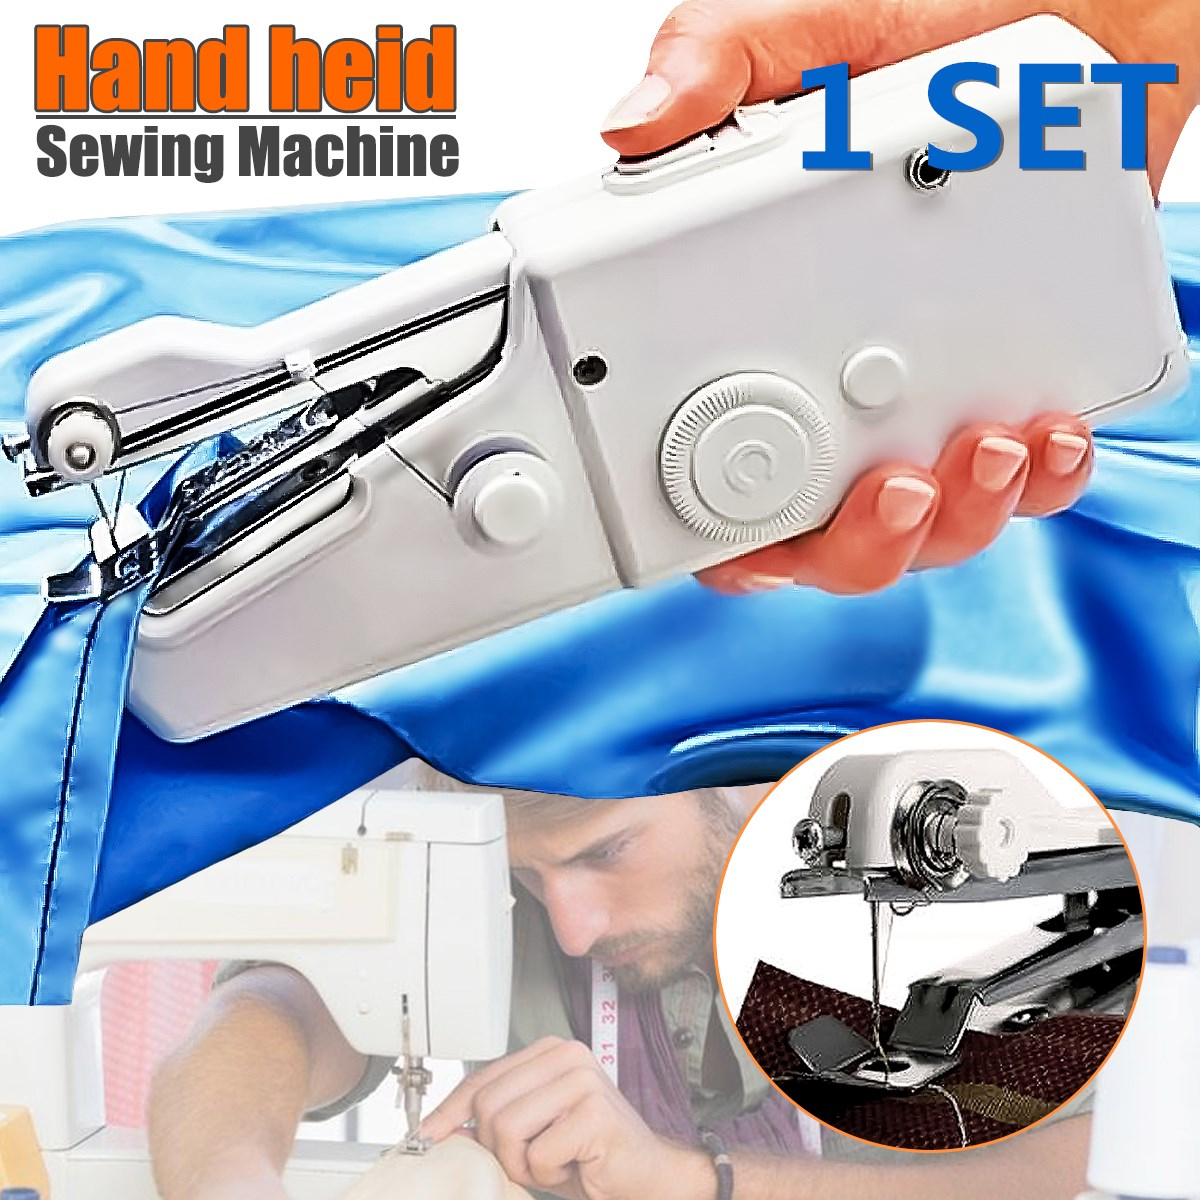 Portable-Stitch-Hand-Held-Sewing-Machine-Stitch-Sew-Quick-Handy-Cordless-Repairs-1593943-1